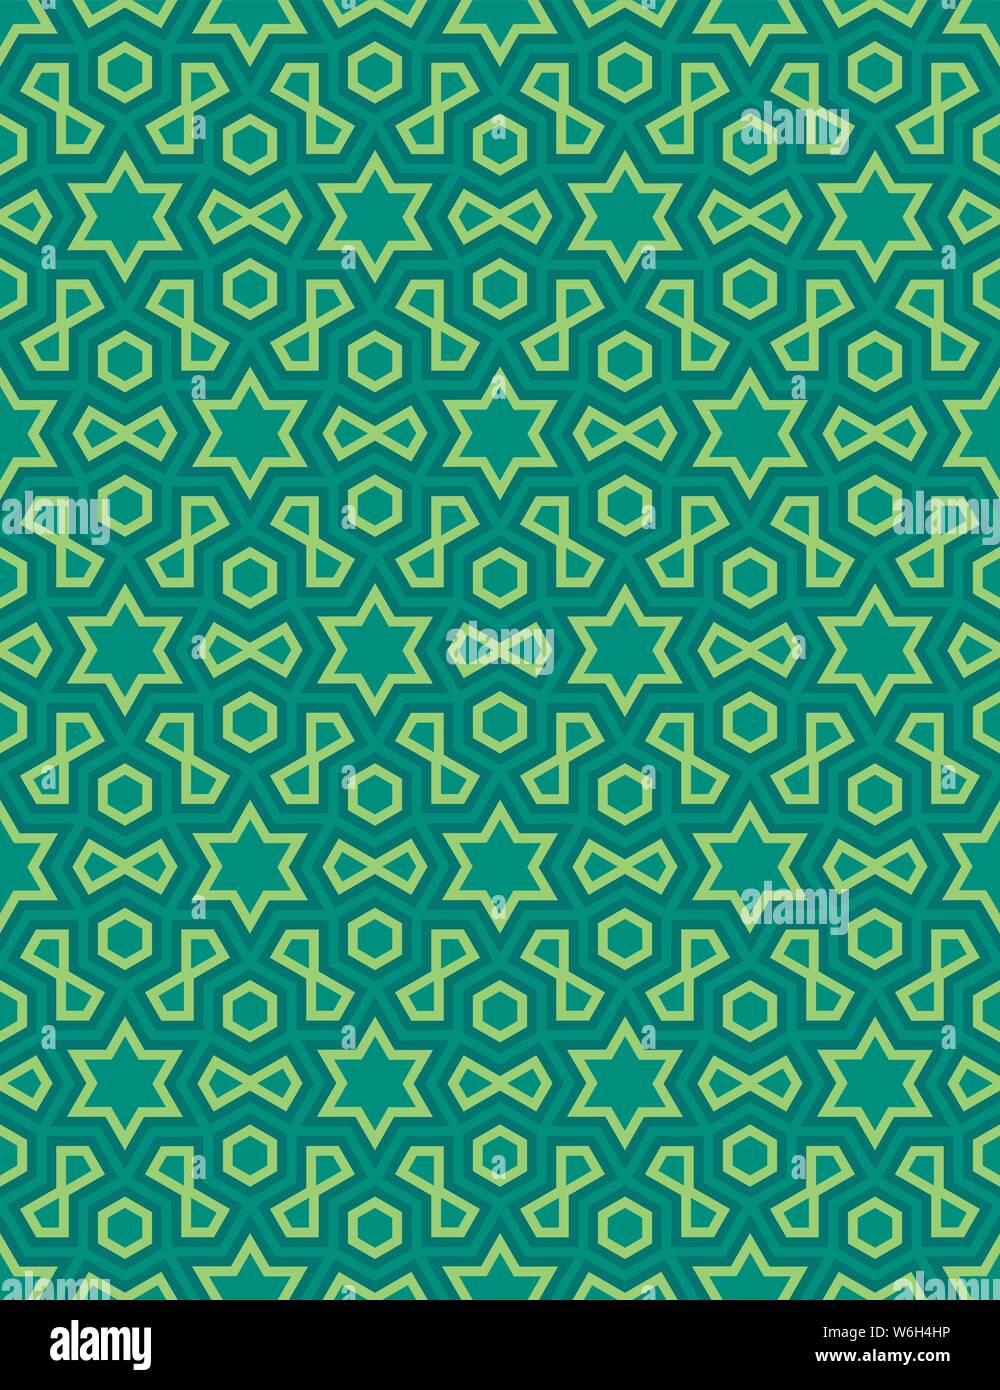 Islamic pattern. Seamless vector geometric lattice background in arabic style. Ethnic line islamic pattern. Stock Vector